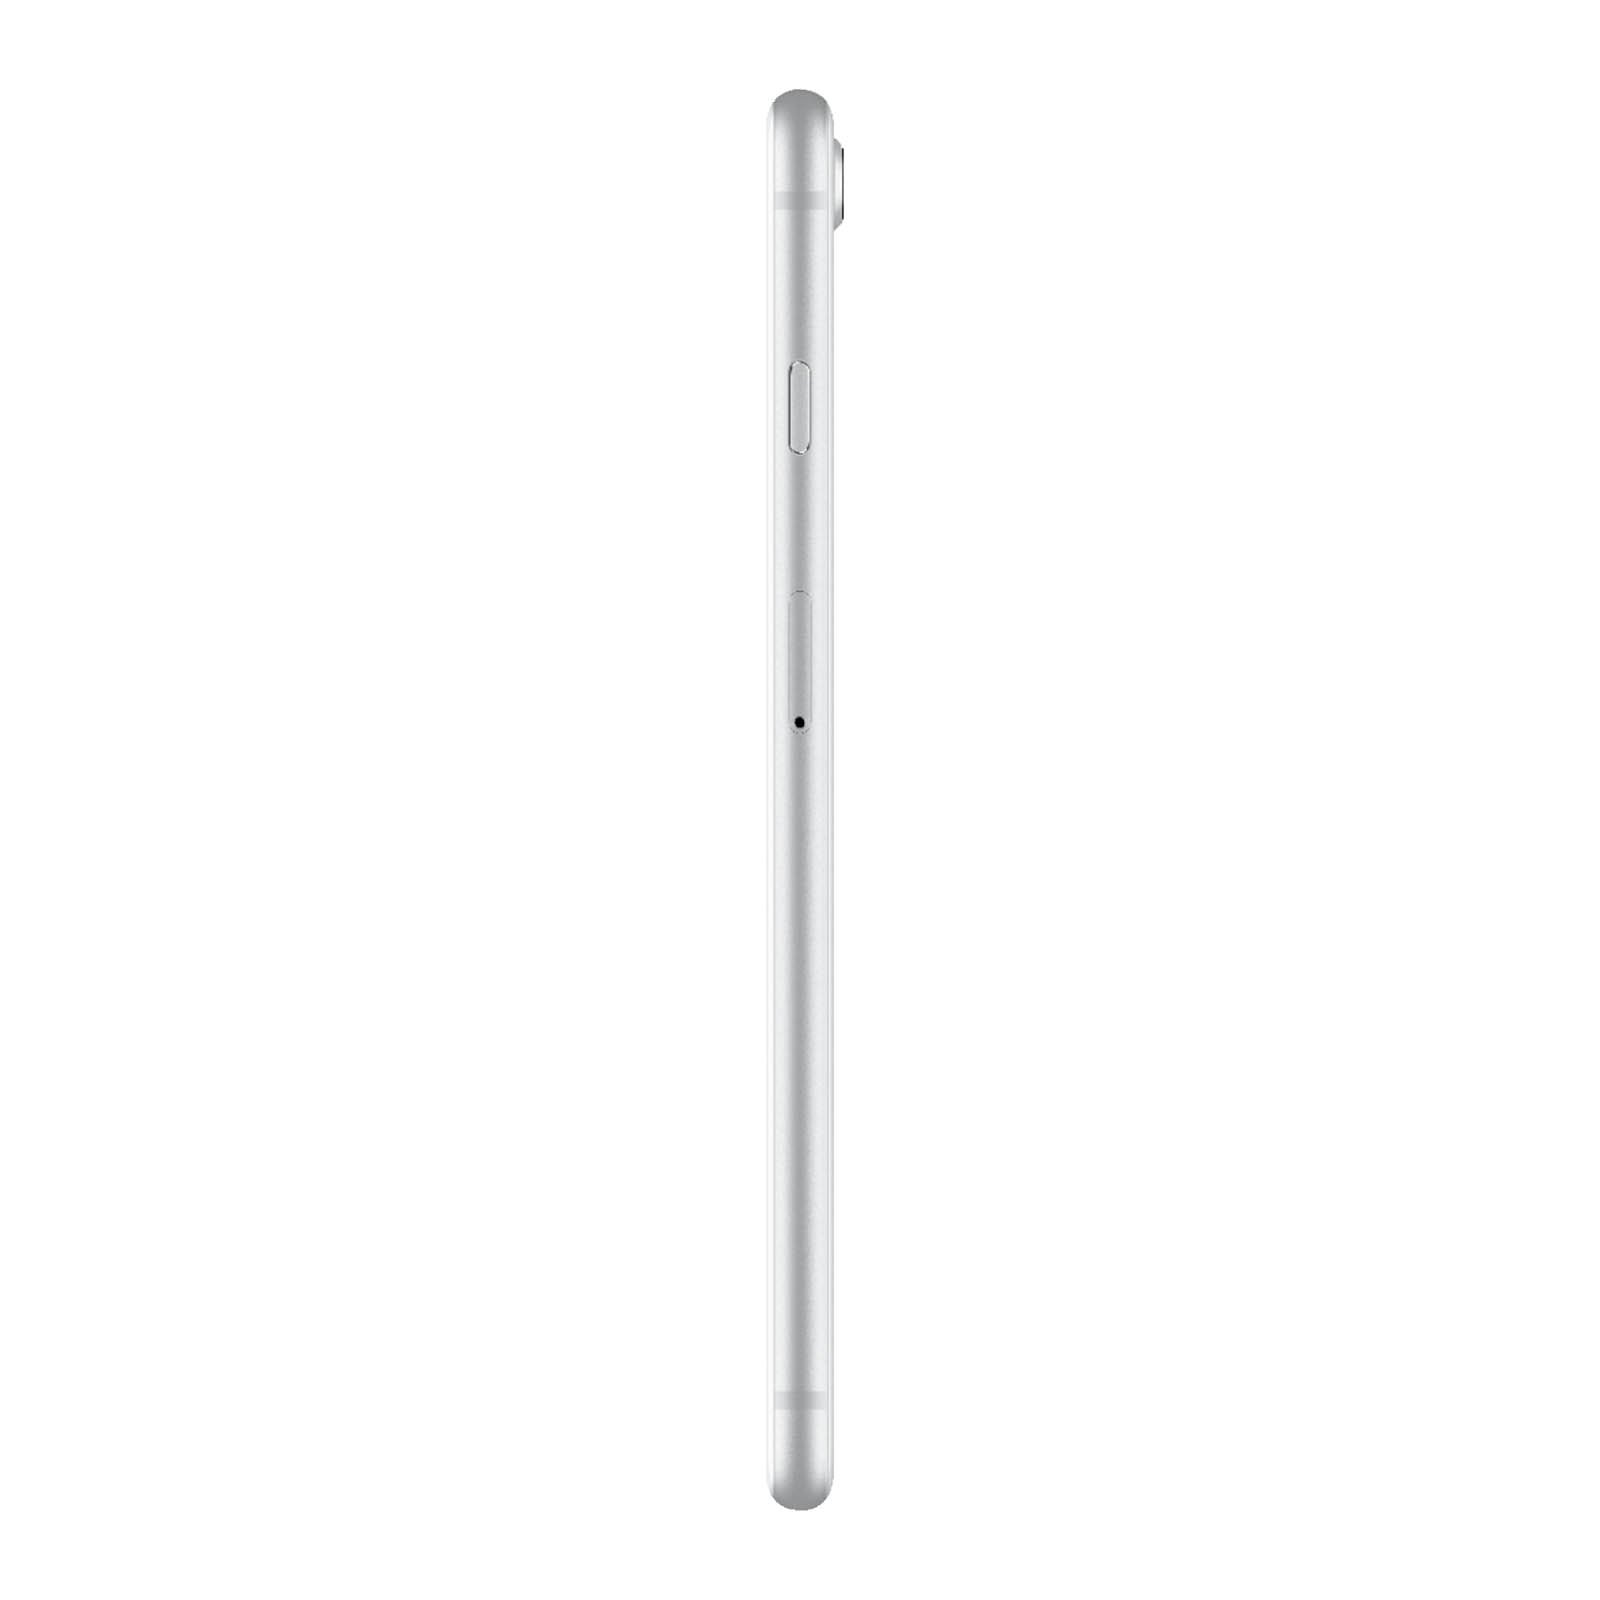 Apple iPhone 8 256GB Silver Pristine - Unlocked